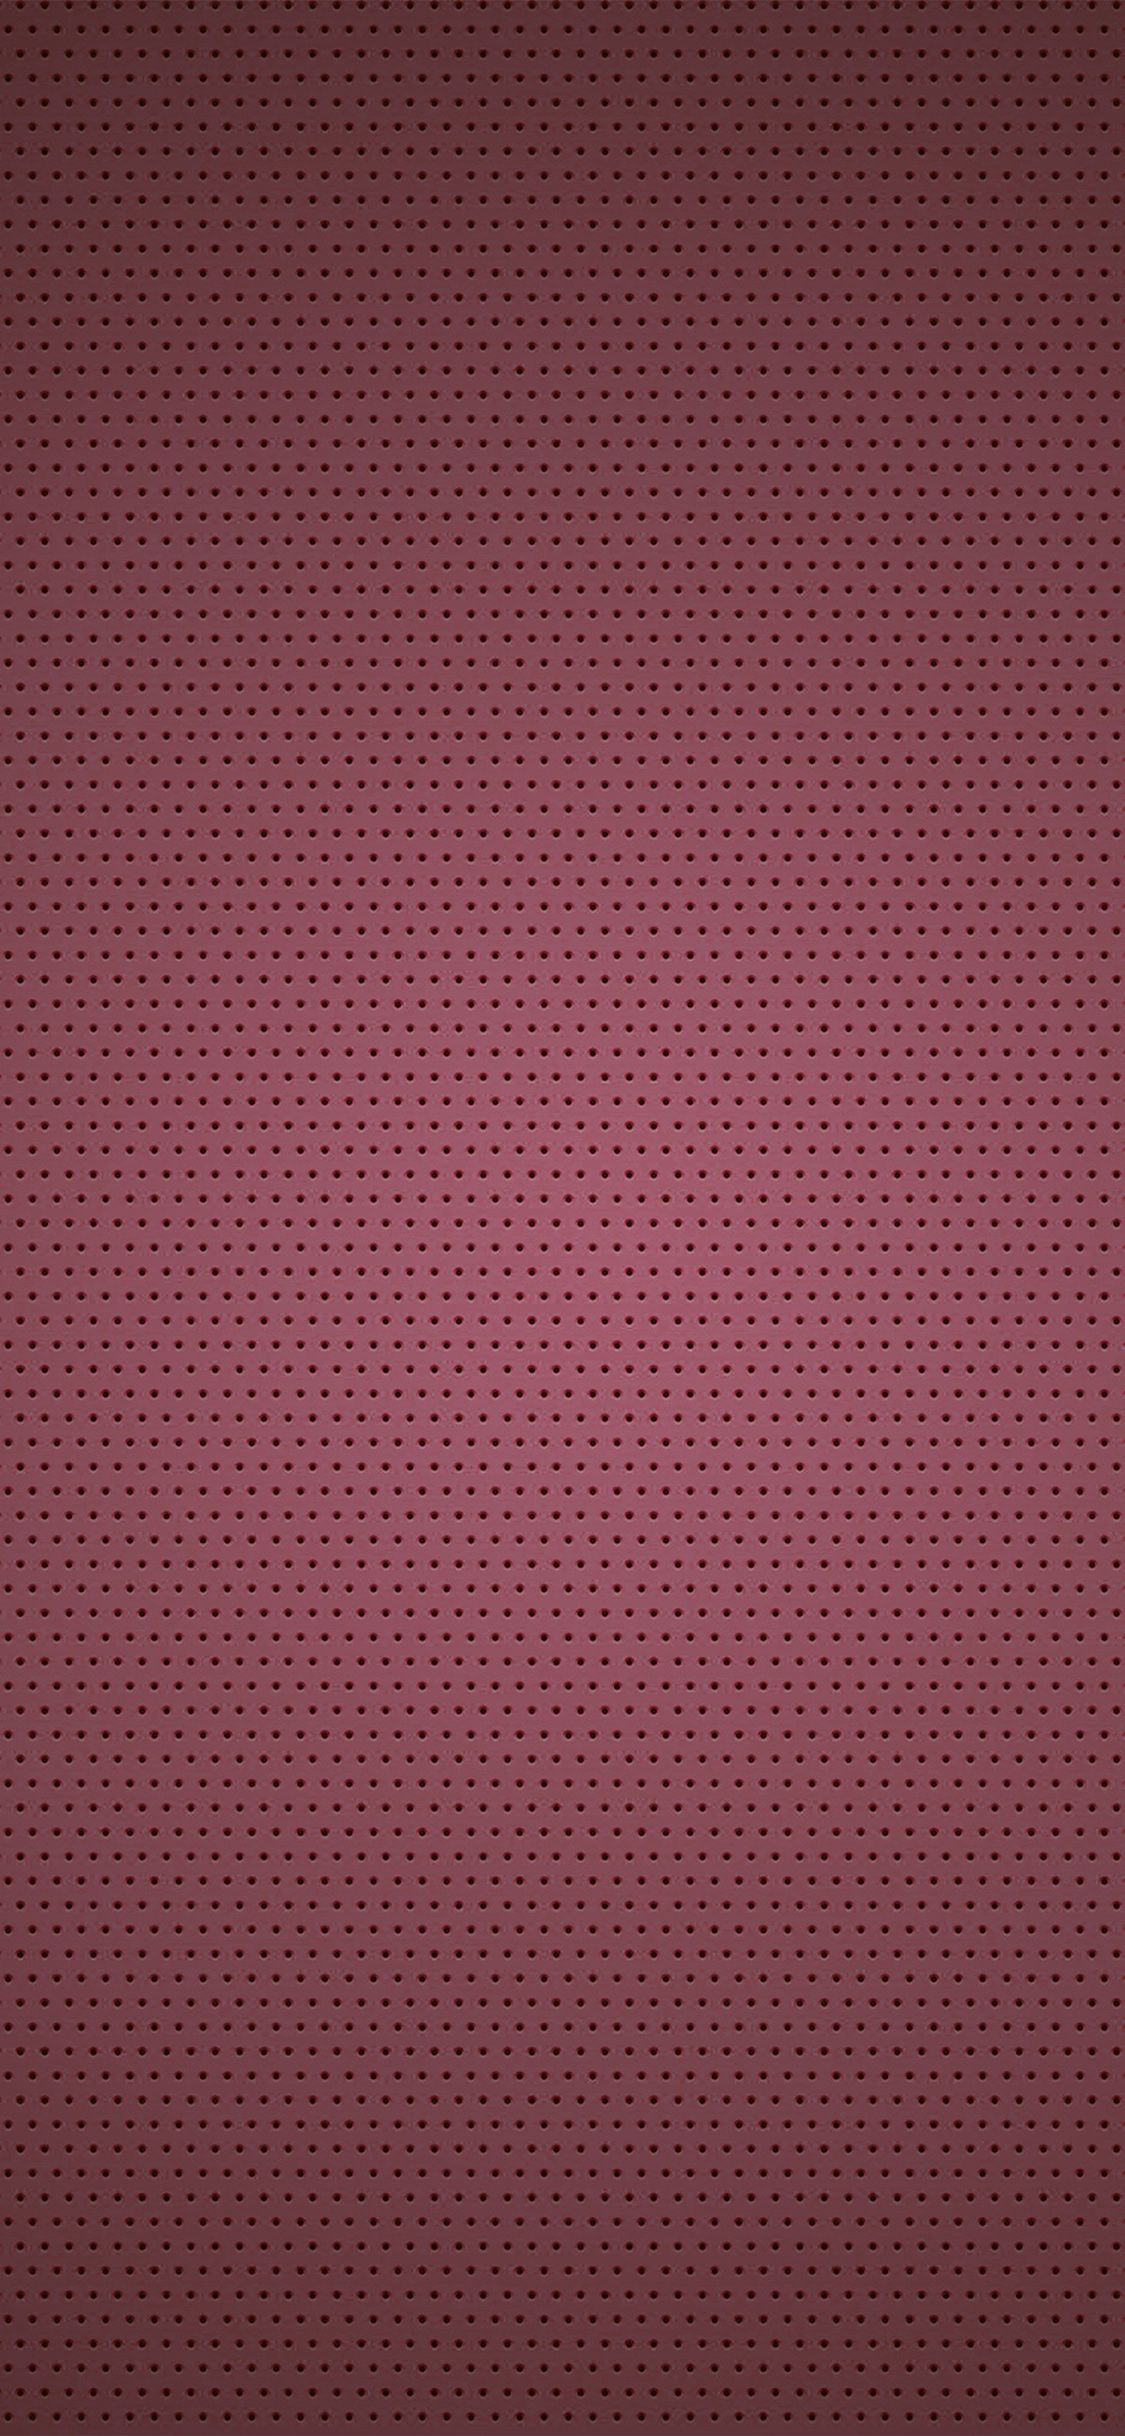 iPhone 8 wallpaper. dot magenta red